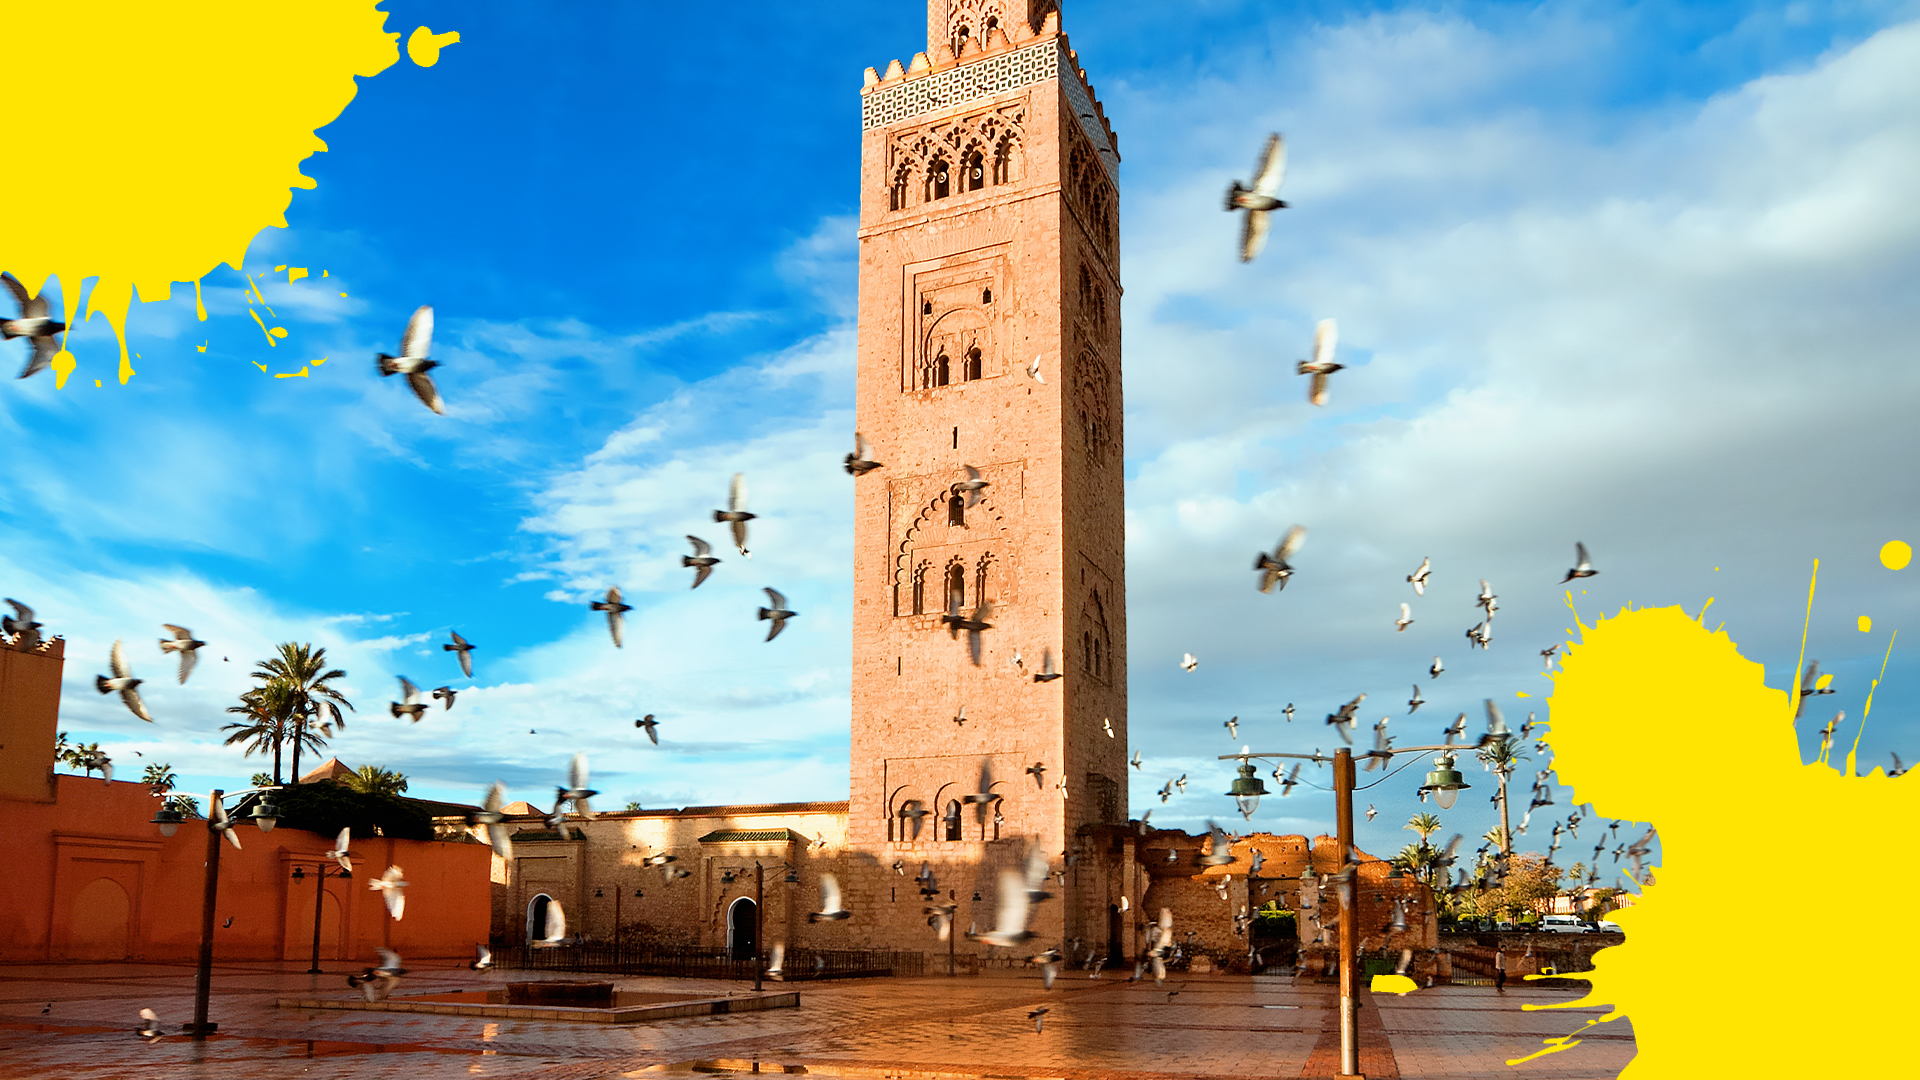 Moroccan scene with yellow splats